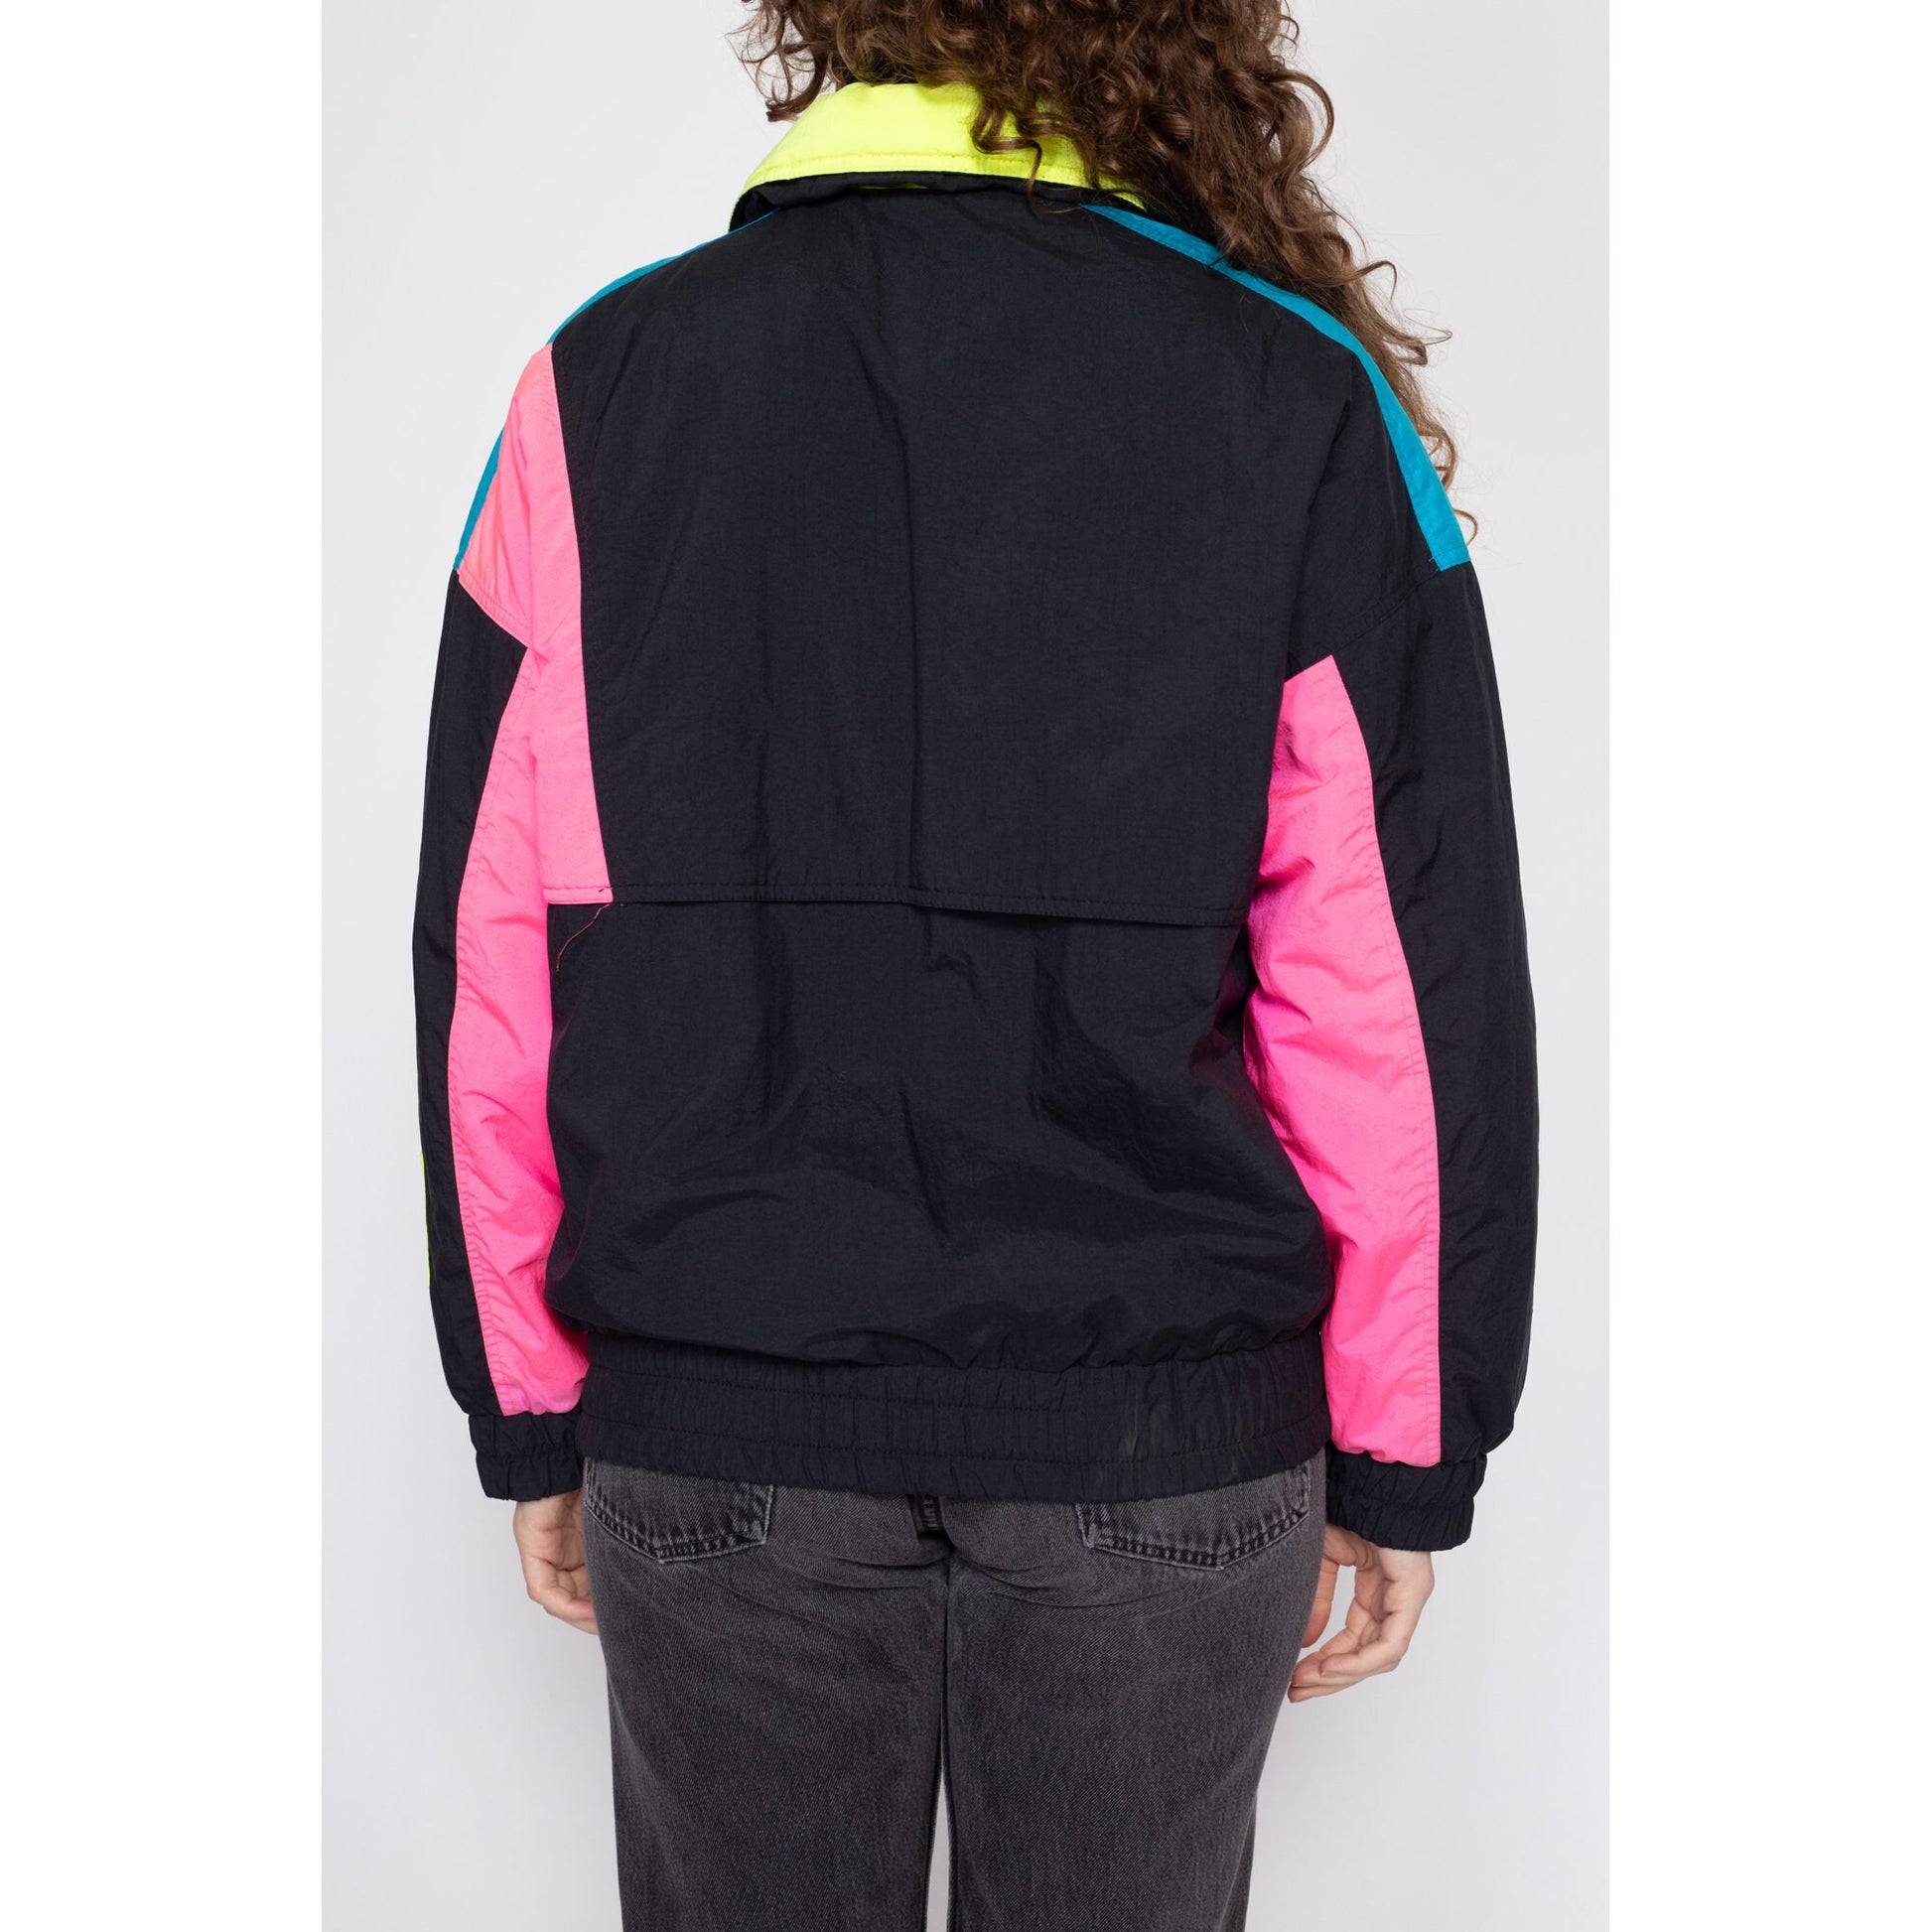 Black 80s windbreaker jacket with neon pink geometric pattern on Craiyon